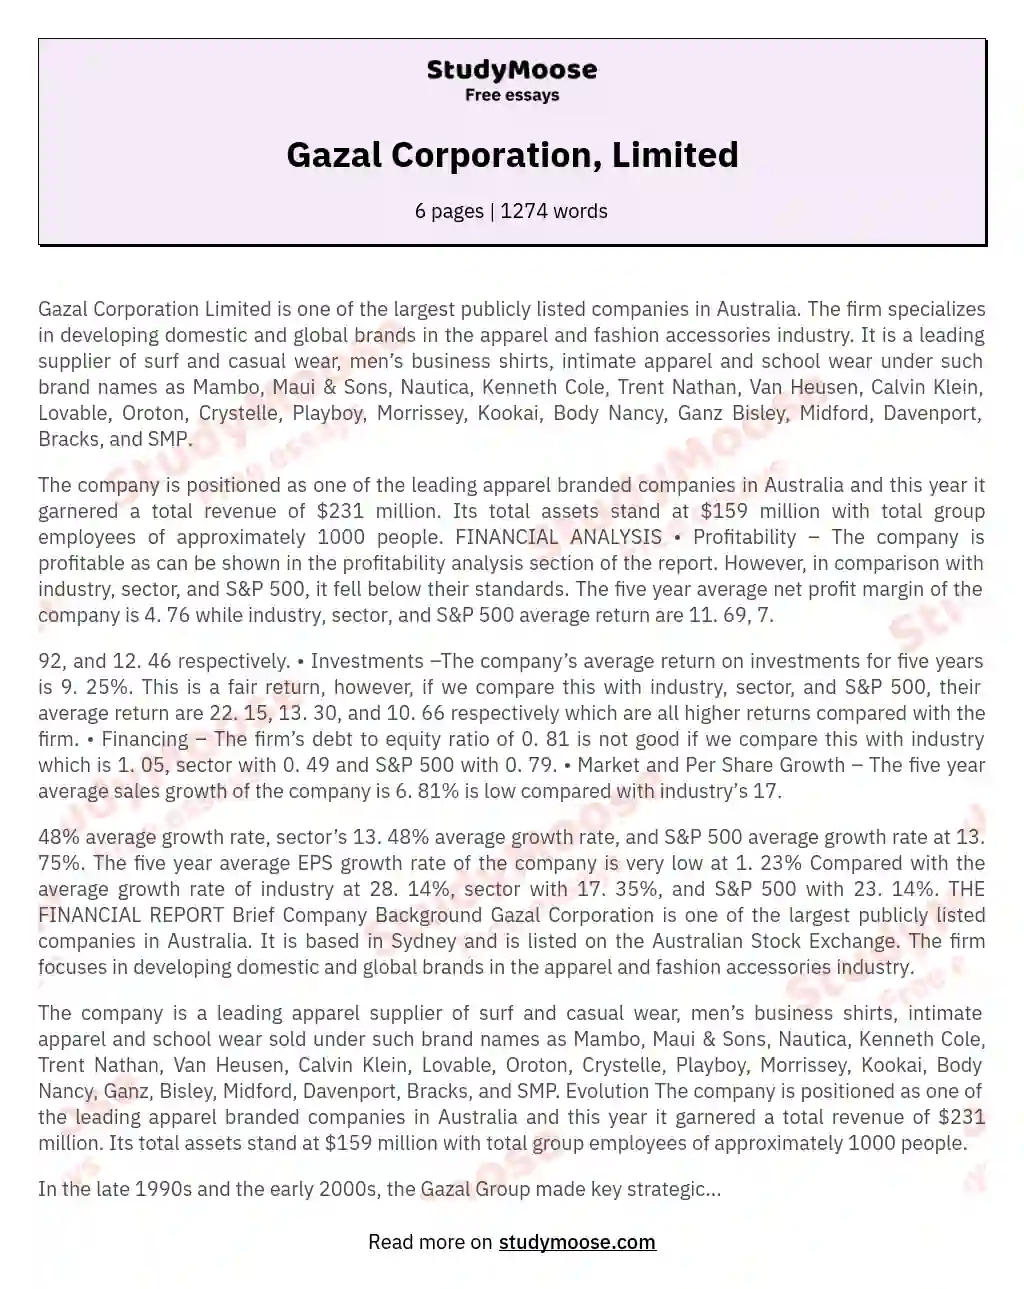 Gazal Corporation, Limited essay